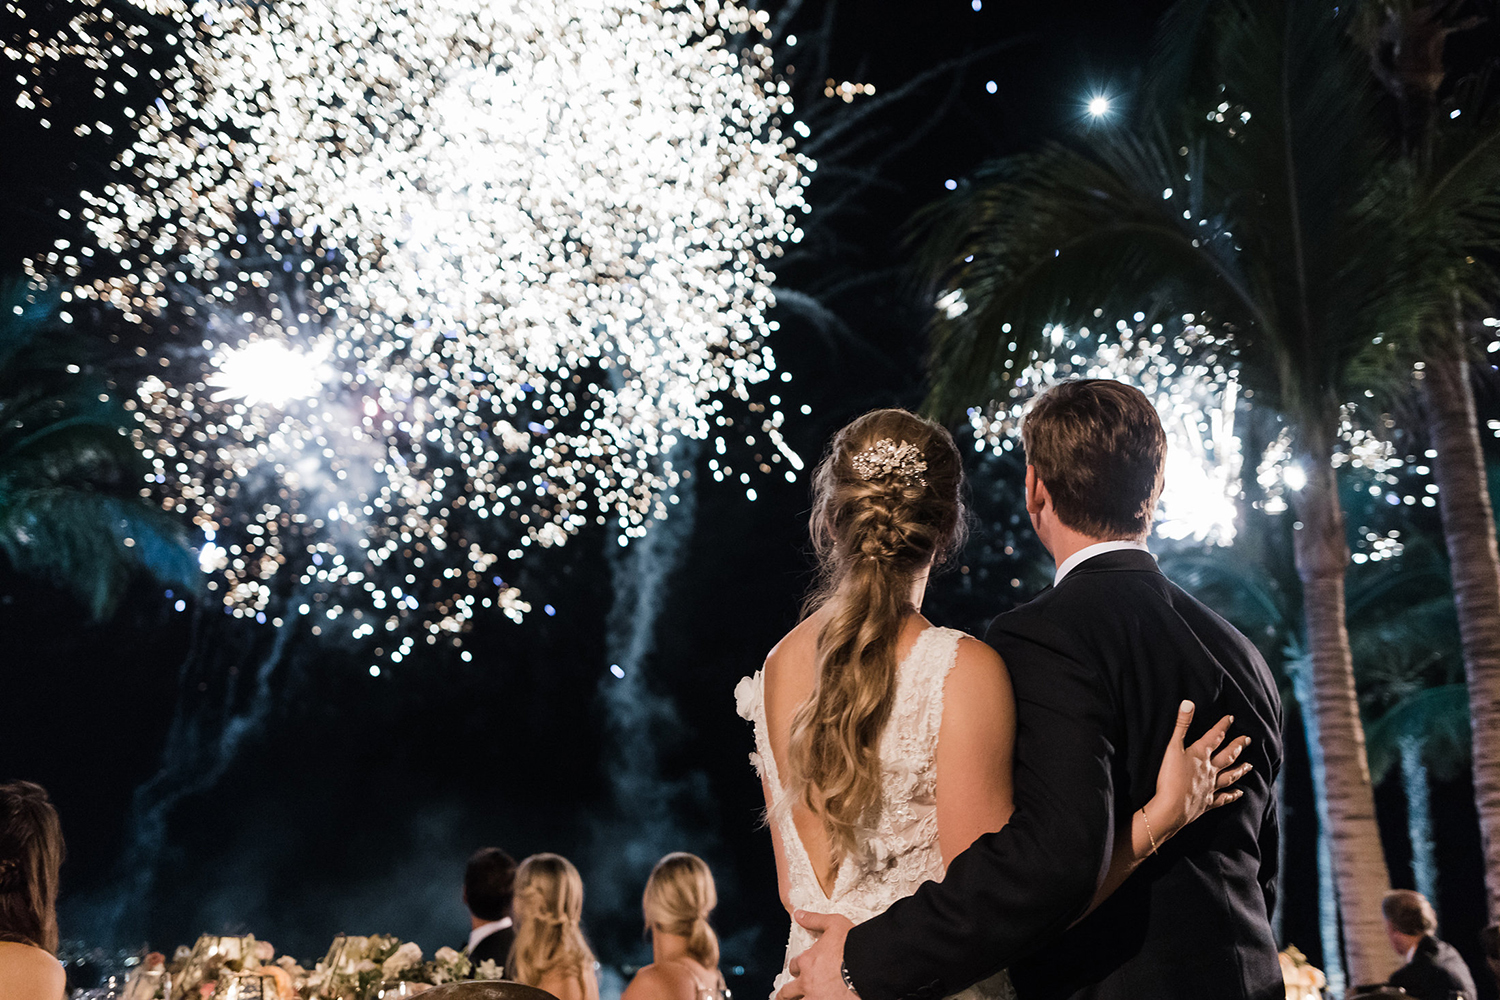 fireworks - destination wedding entertainment in mexico